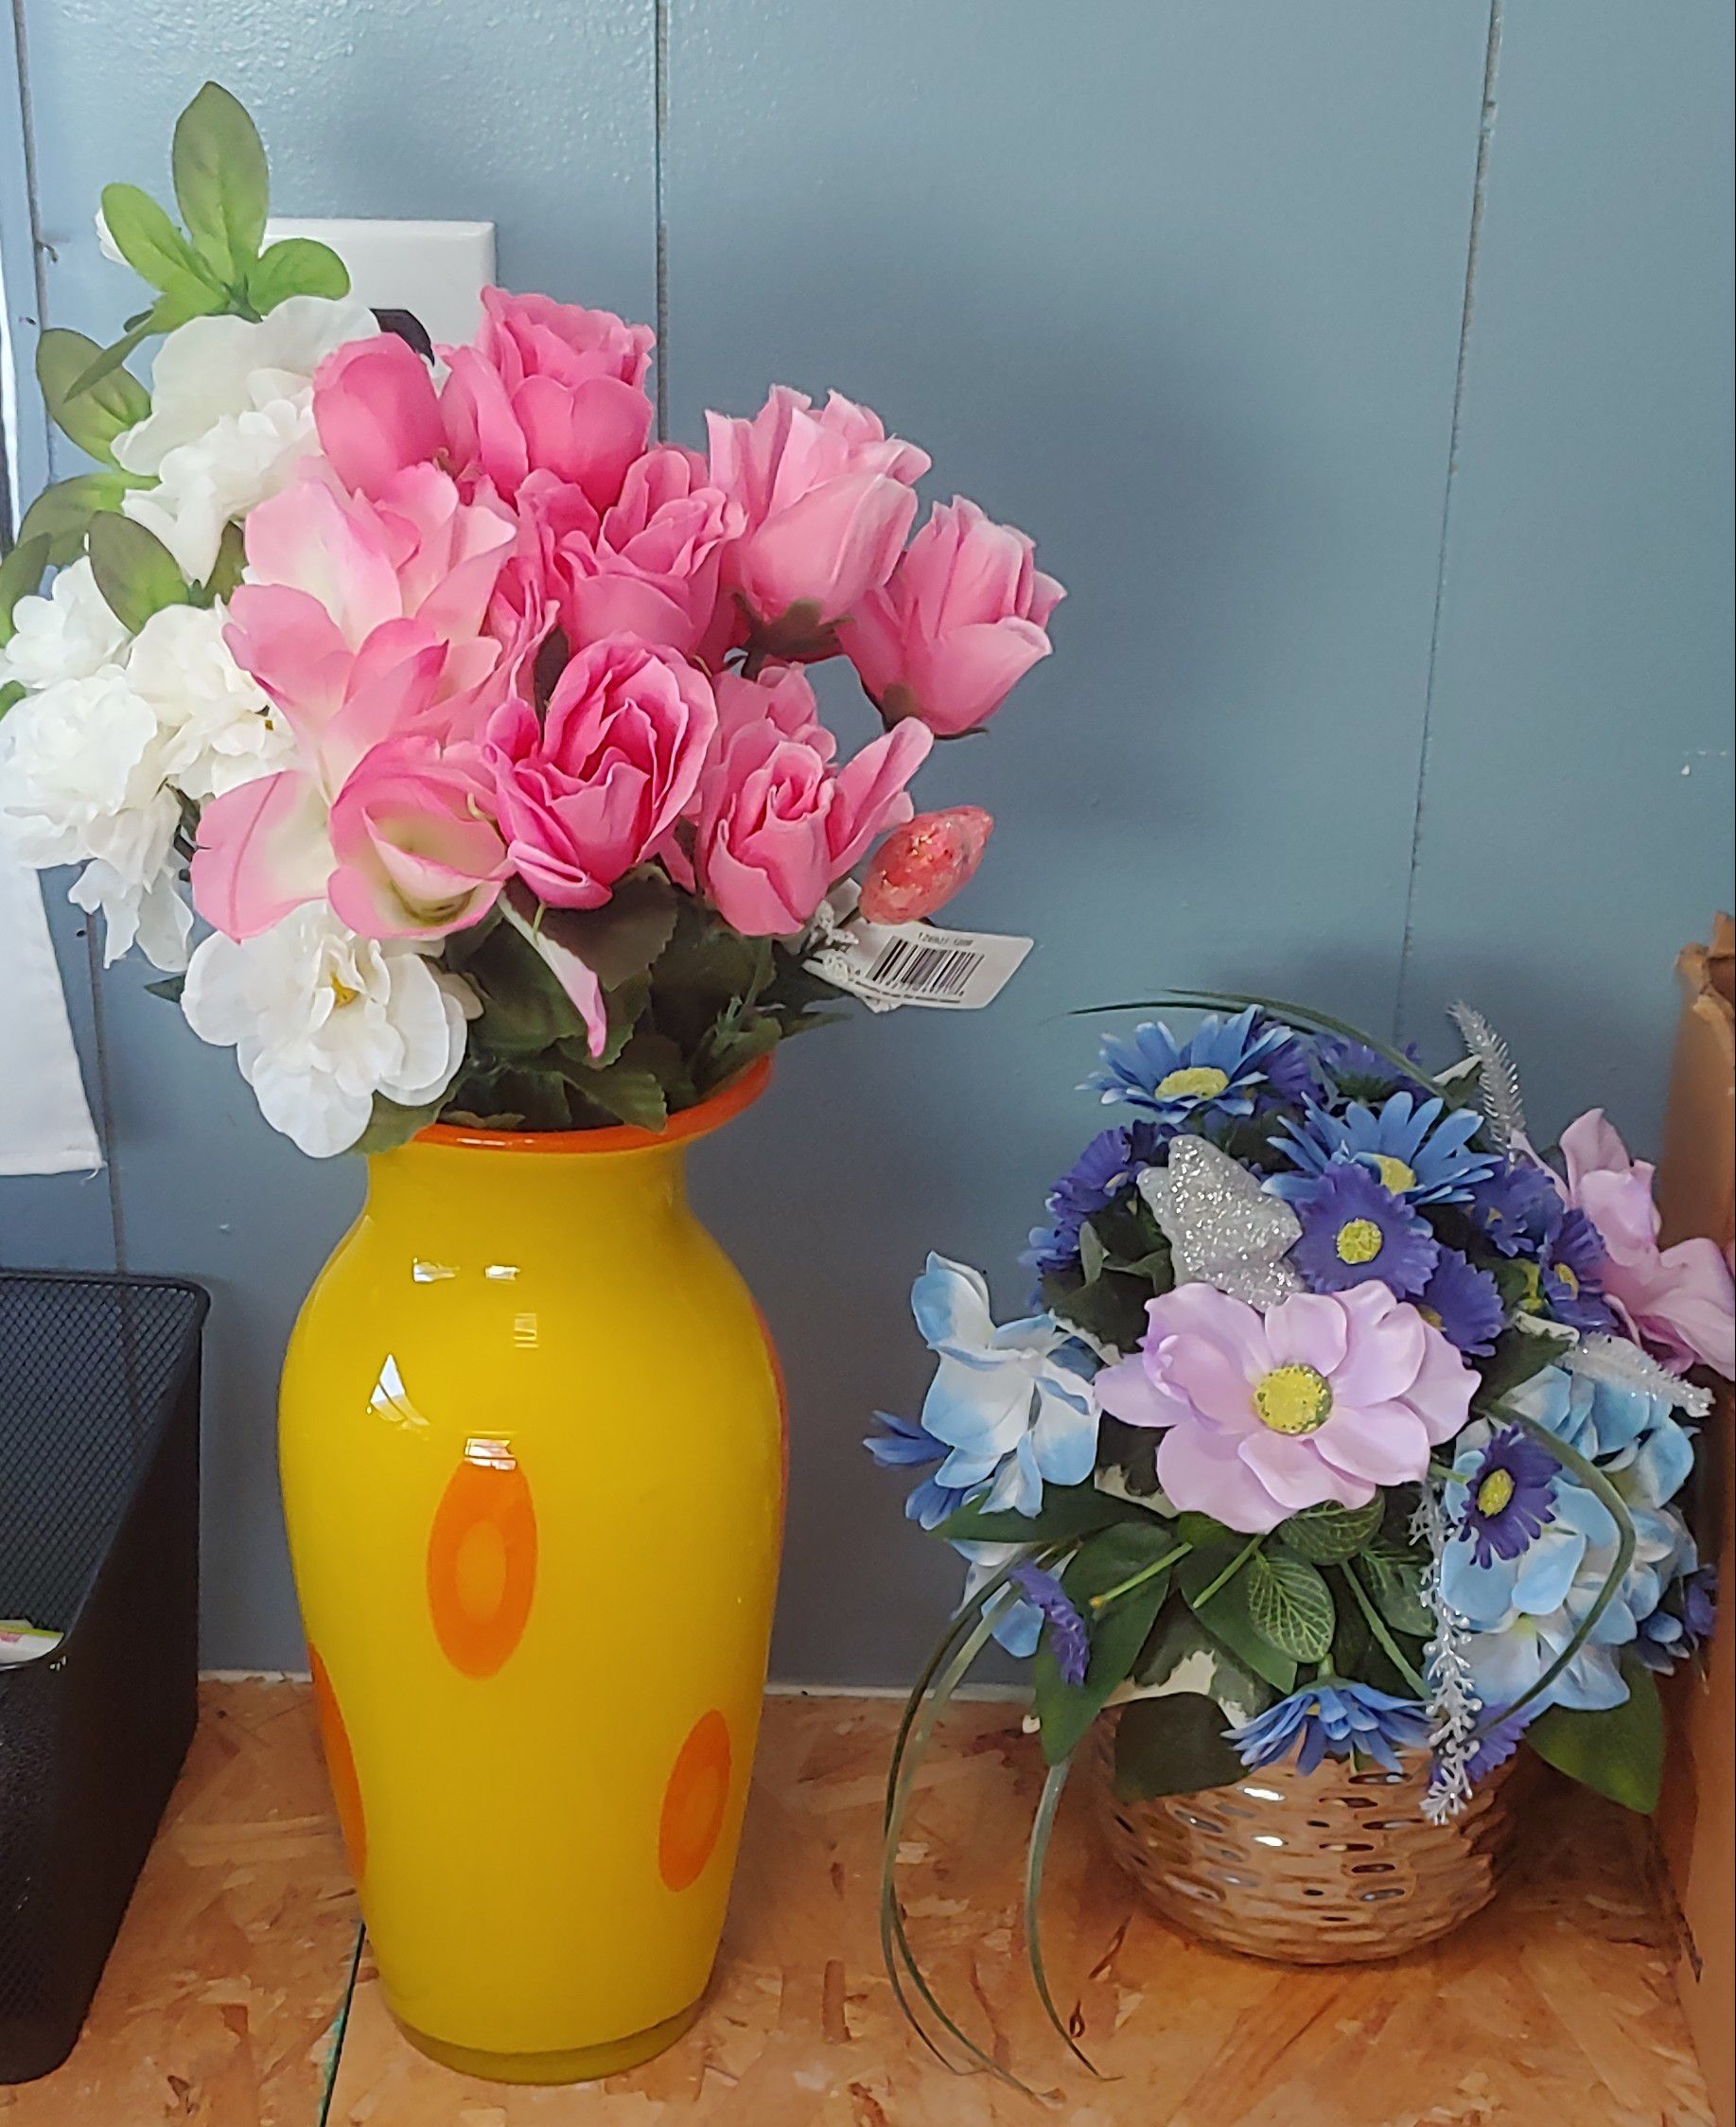 2x Decor Vase & Pot with flowers